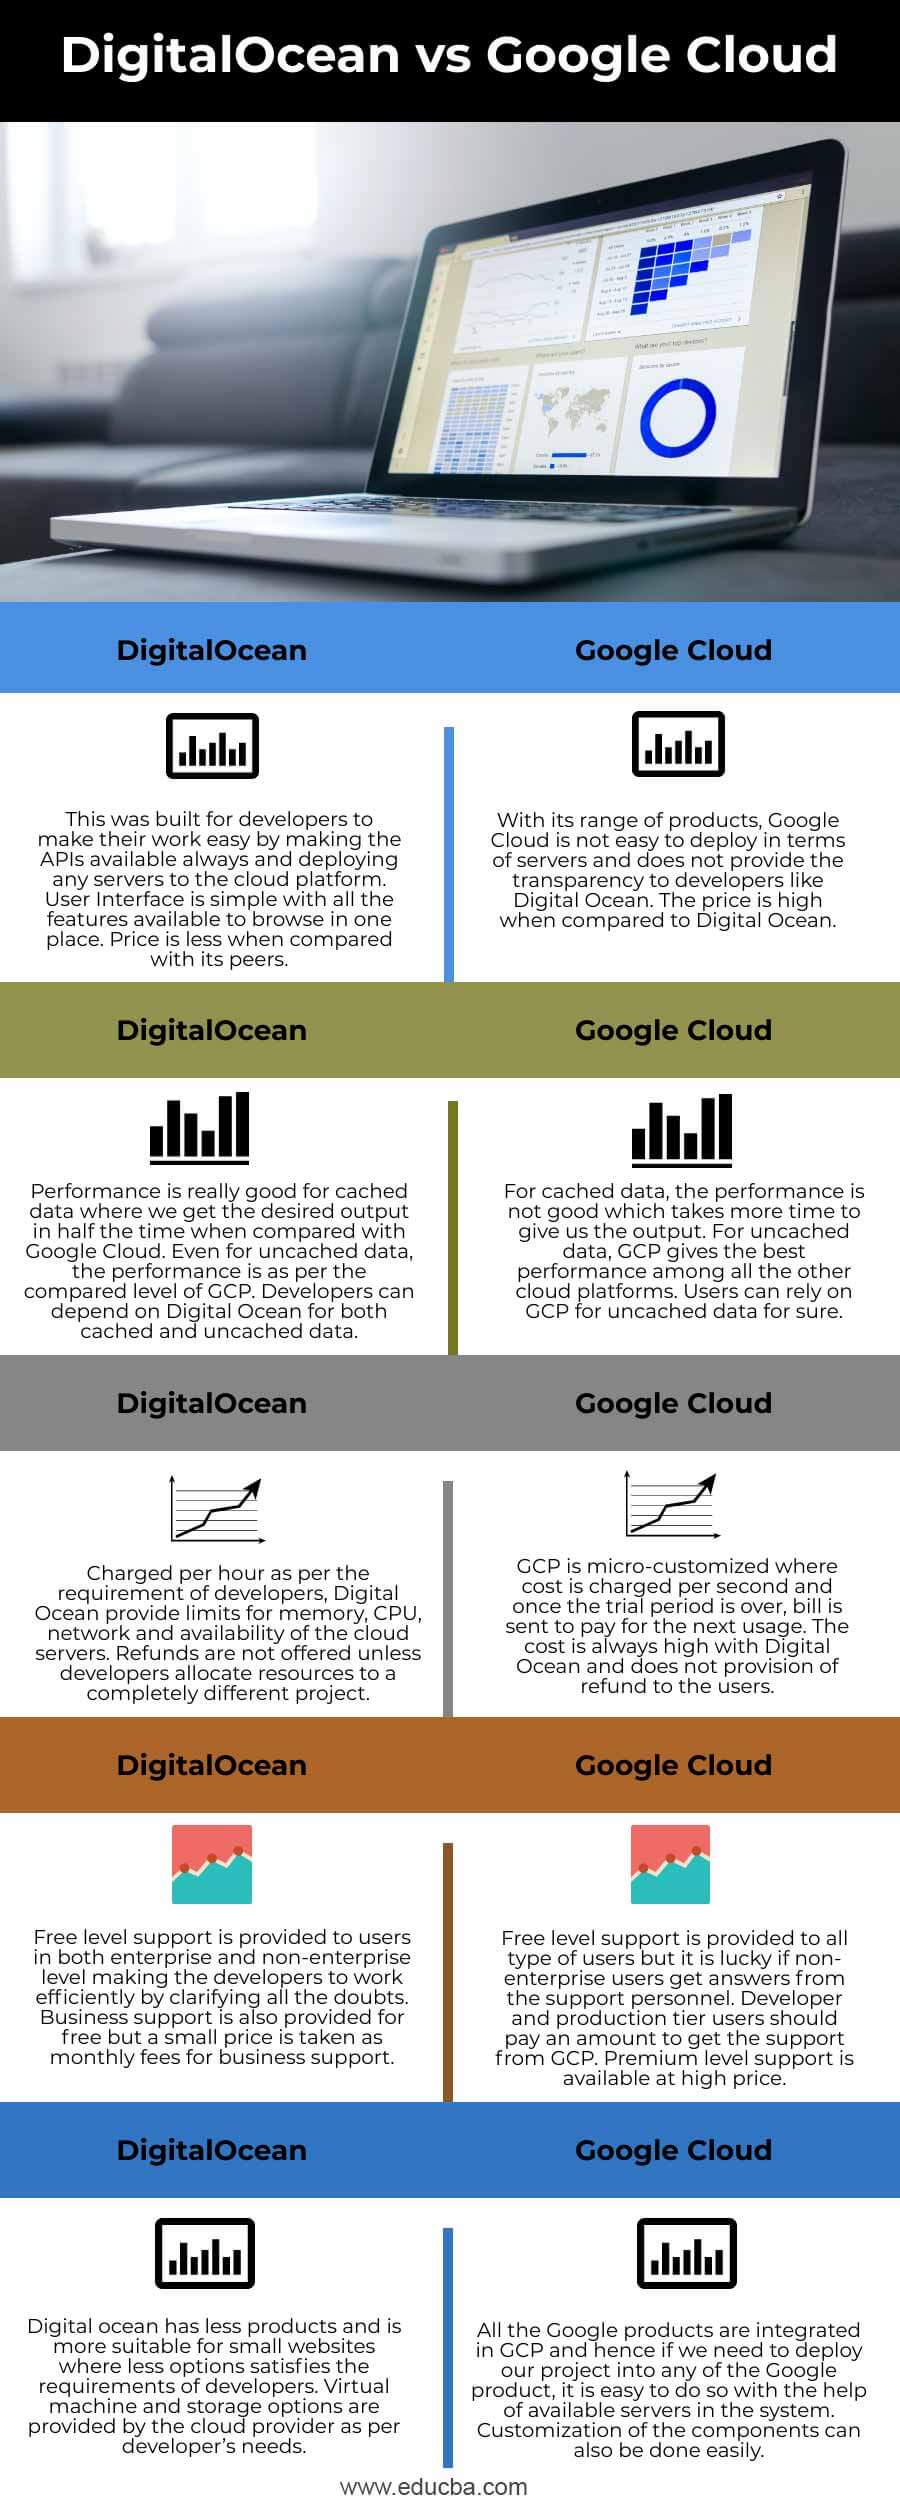 DigitalOcean-vs-Google-Cloud-info